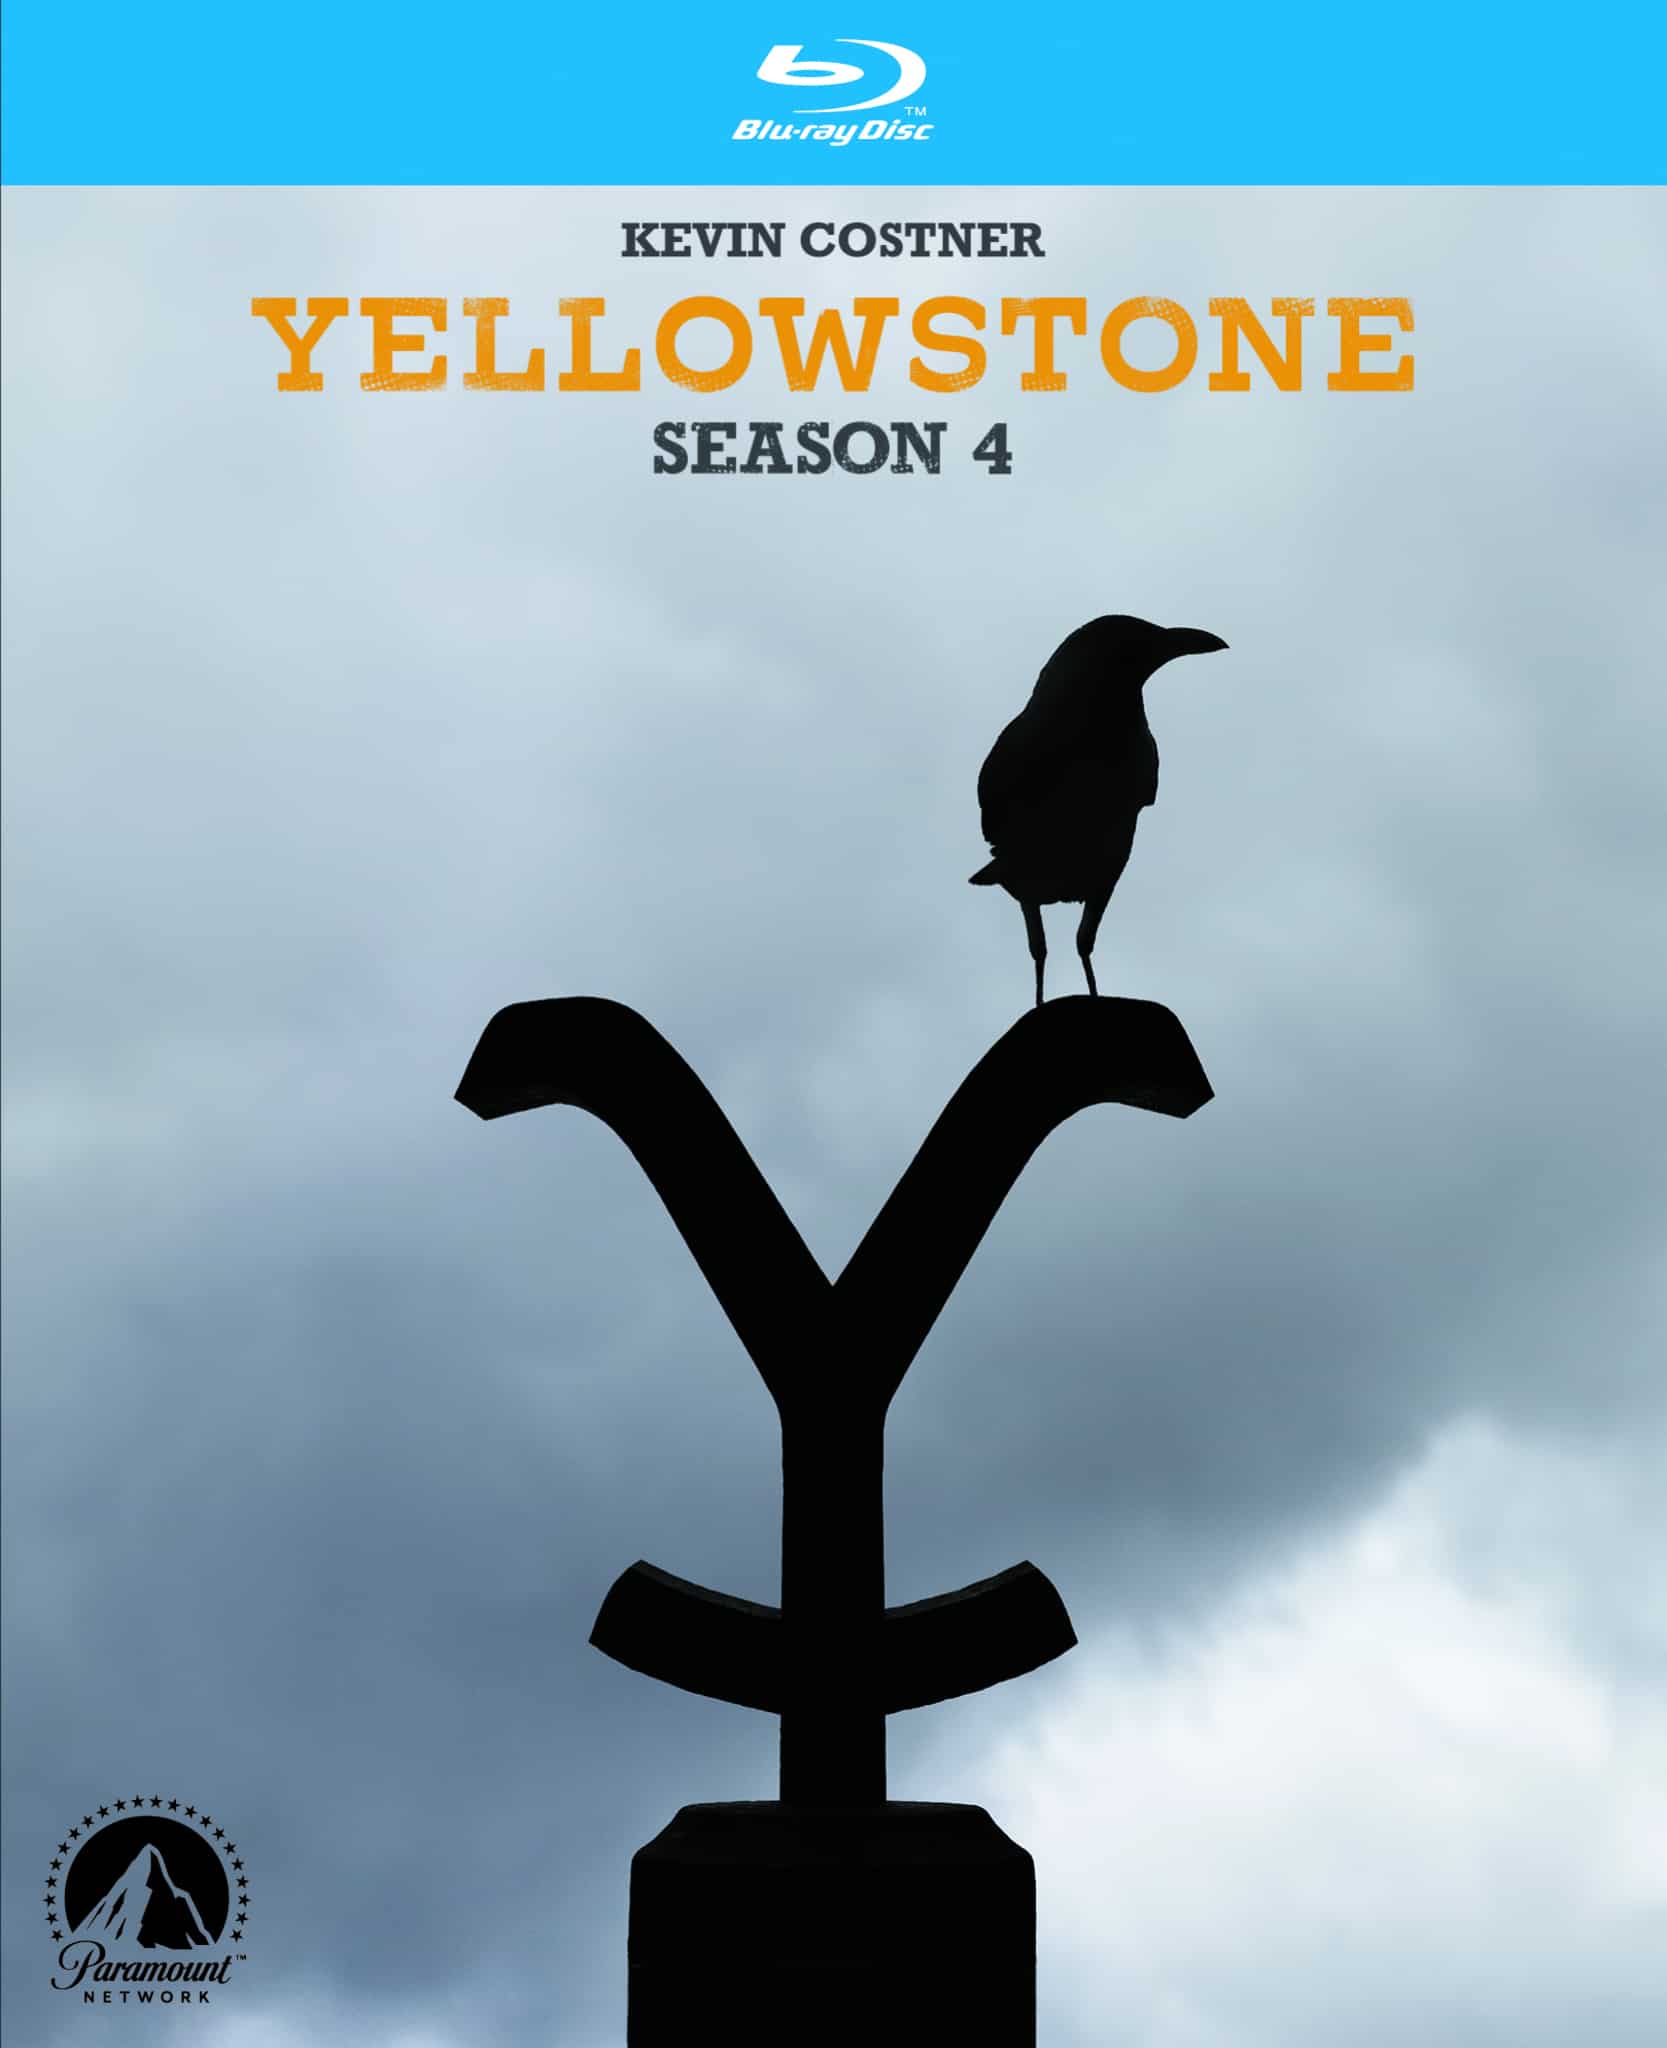 YELLOWSTONE Season 4 arrives on Blu-ray & DVD March 8th 2